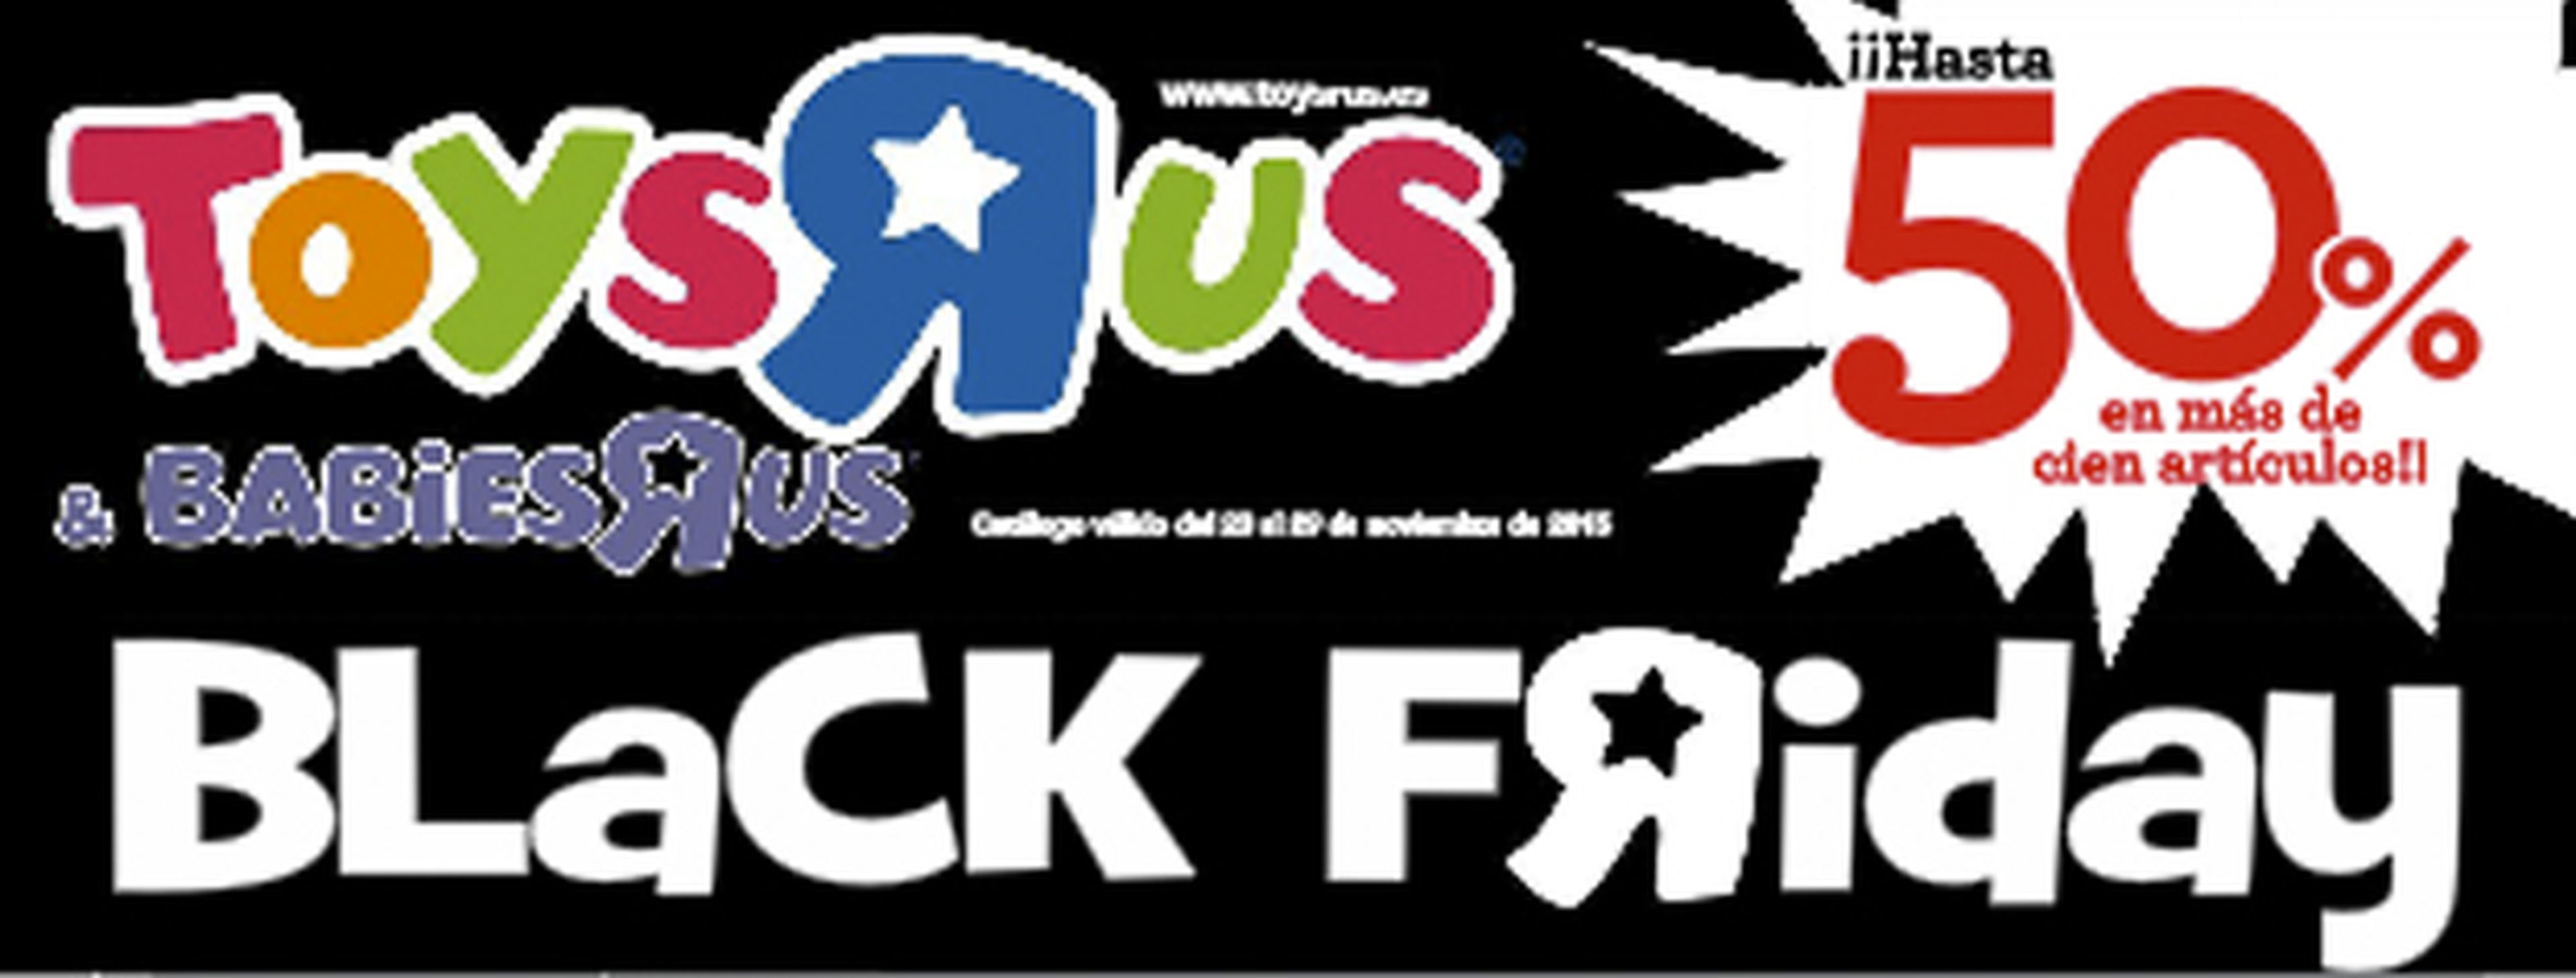 Banner informativo Toys 'R' Us